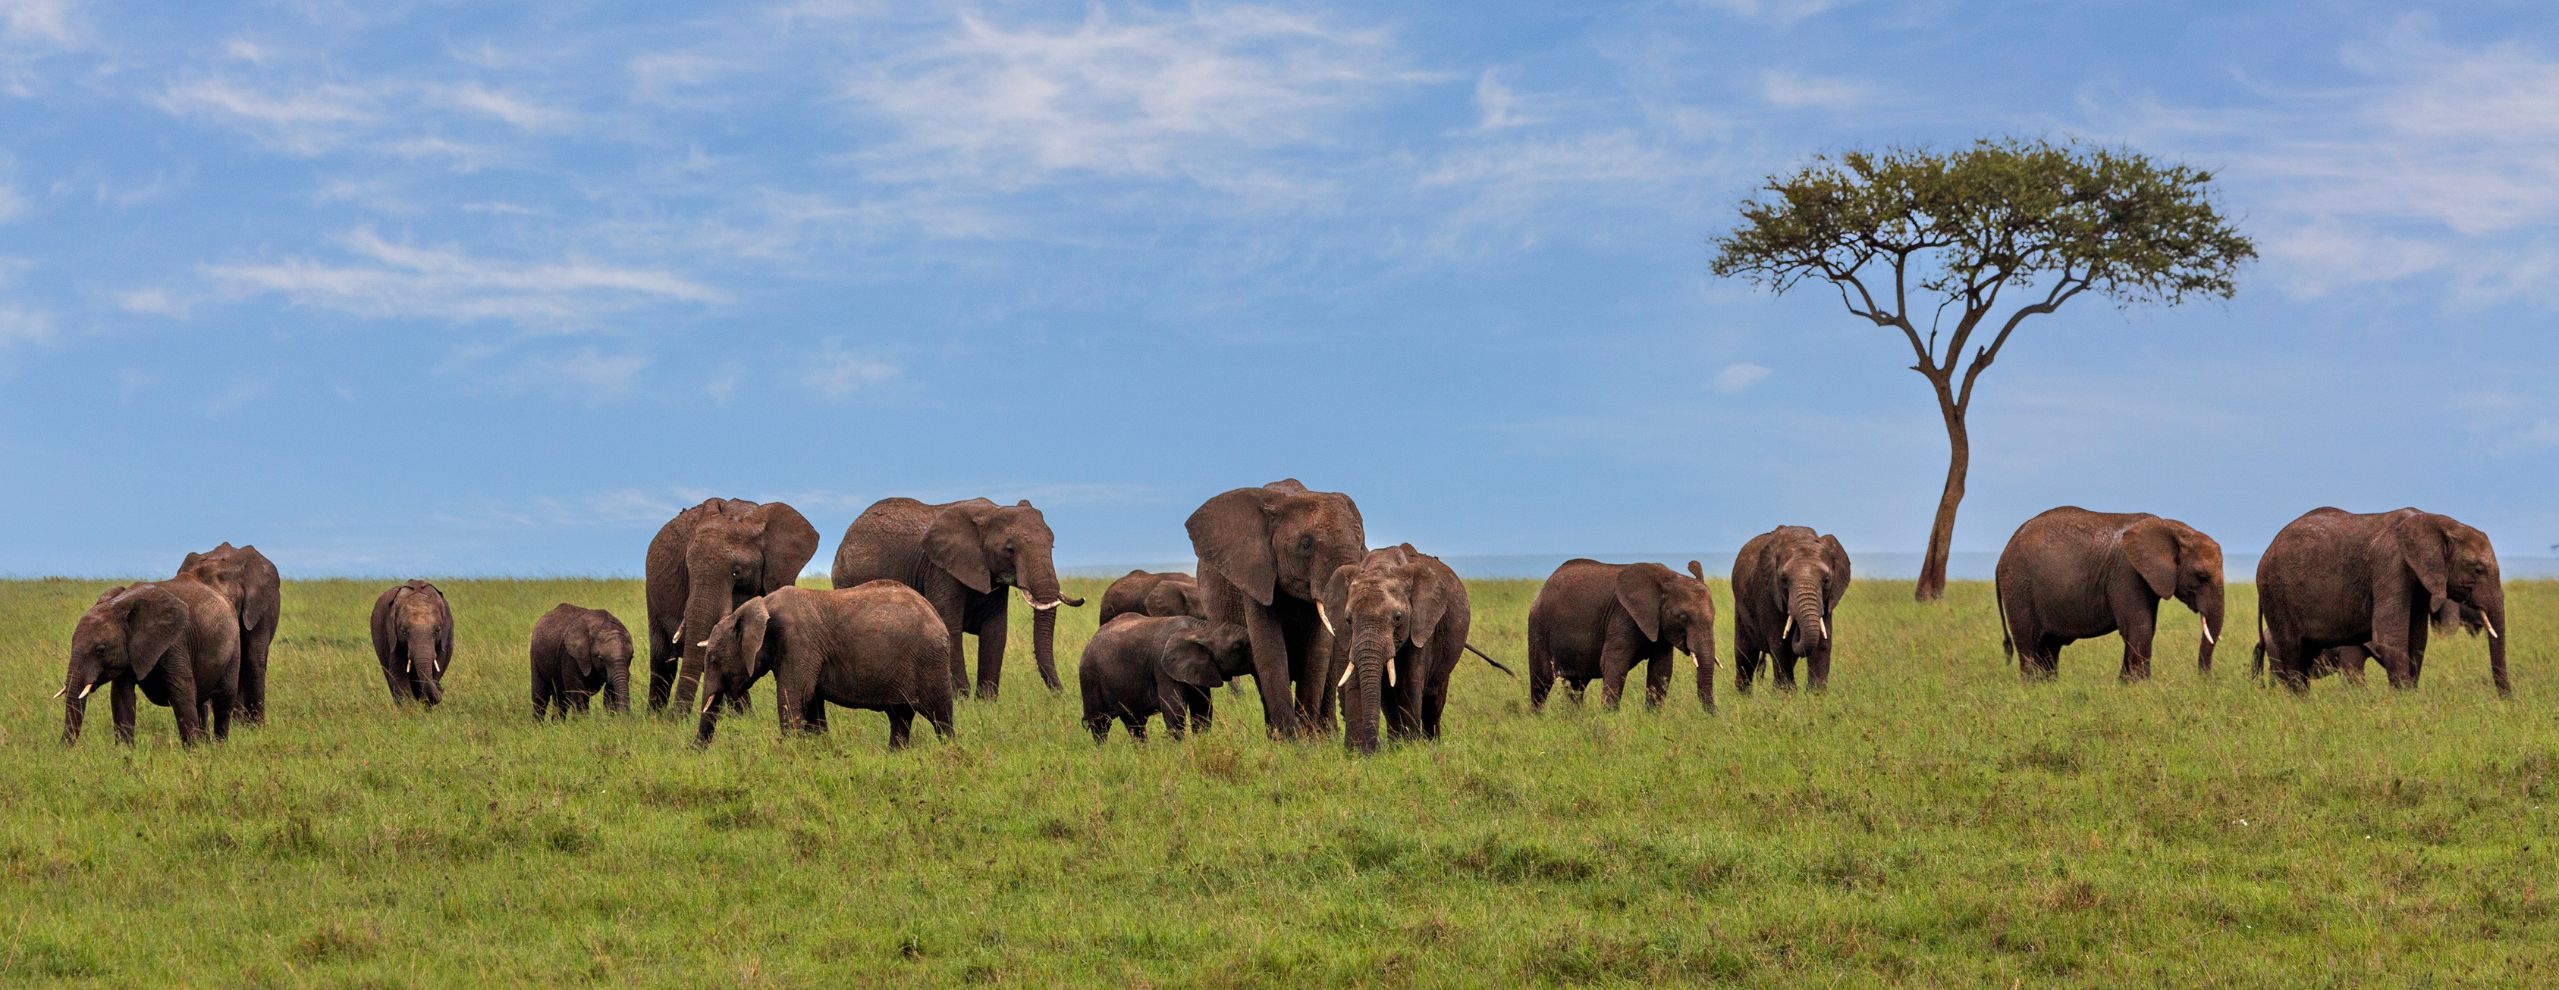 elephants and a single tree in Maasai Mara, Kenya, Africa